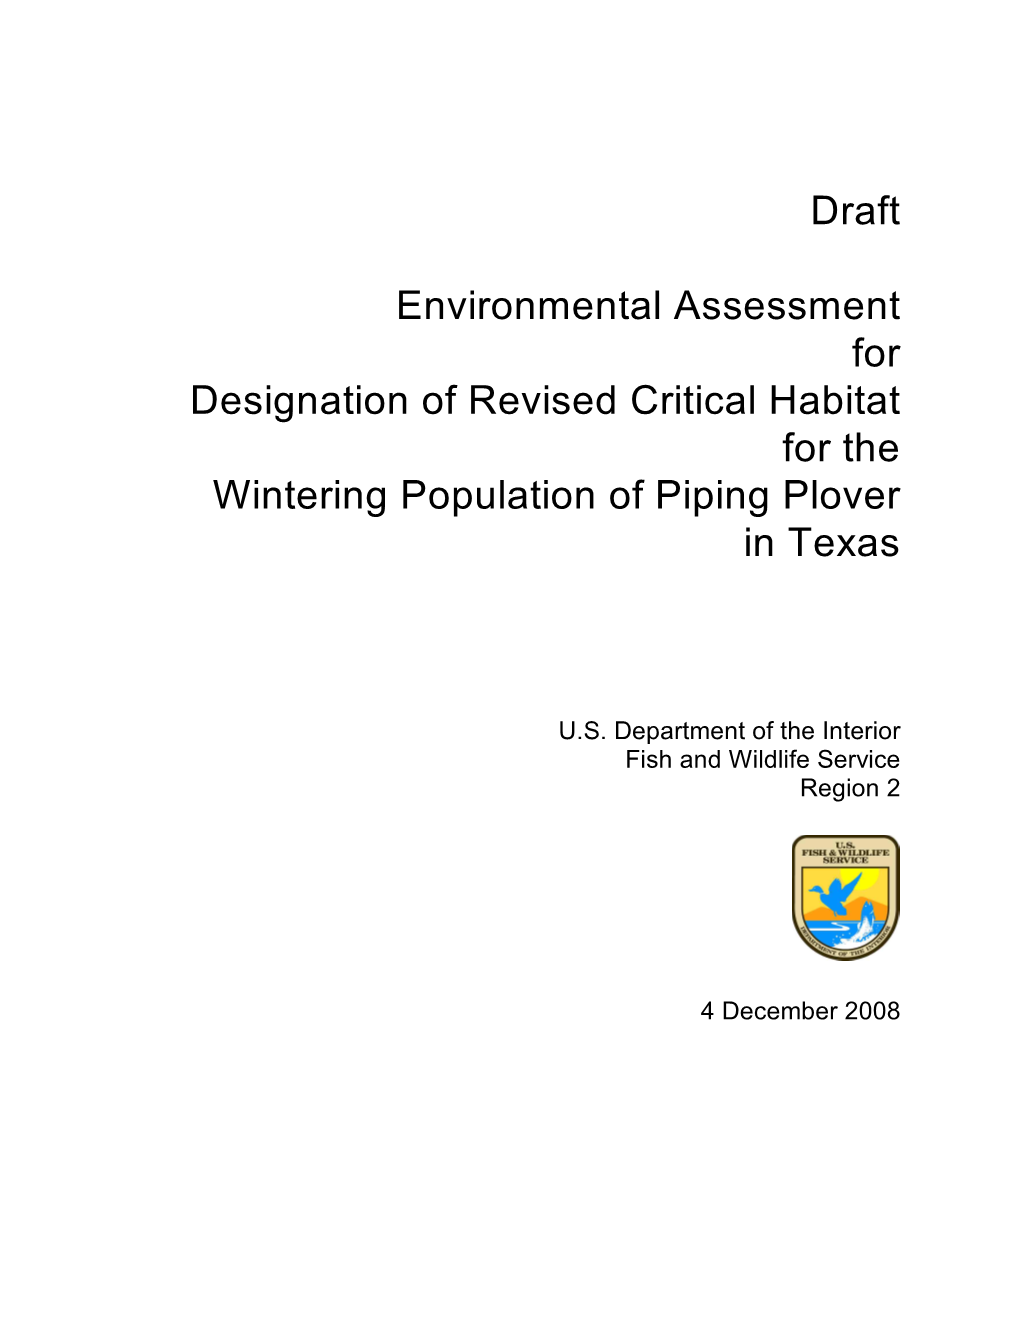 Draft Environmental Assessment for Designation of Revised Critical